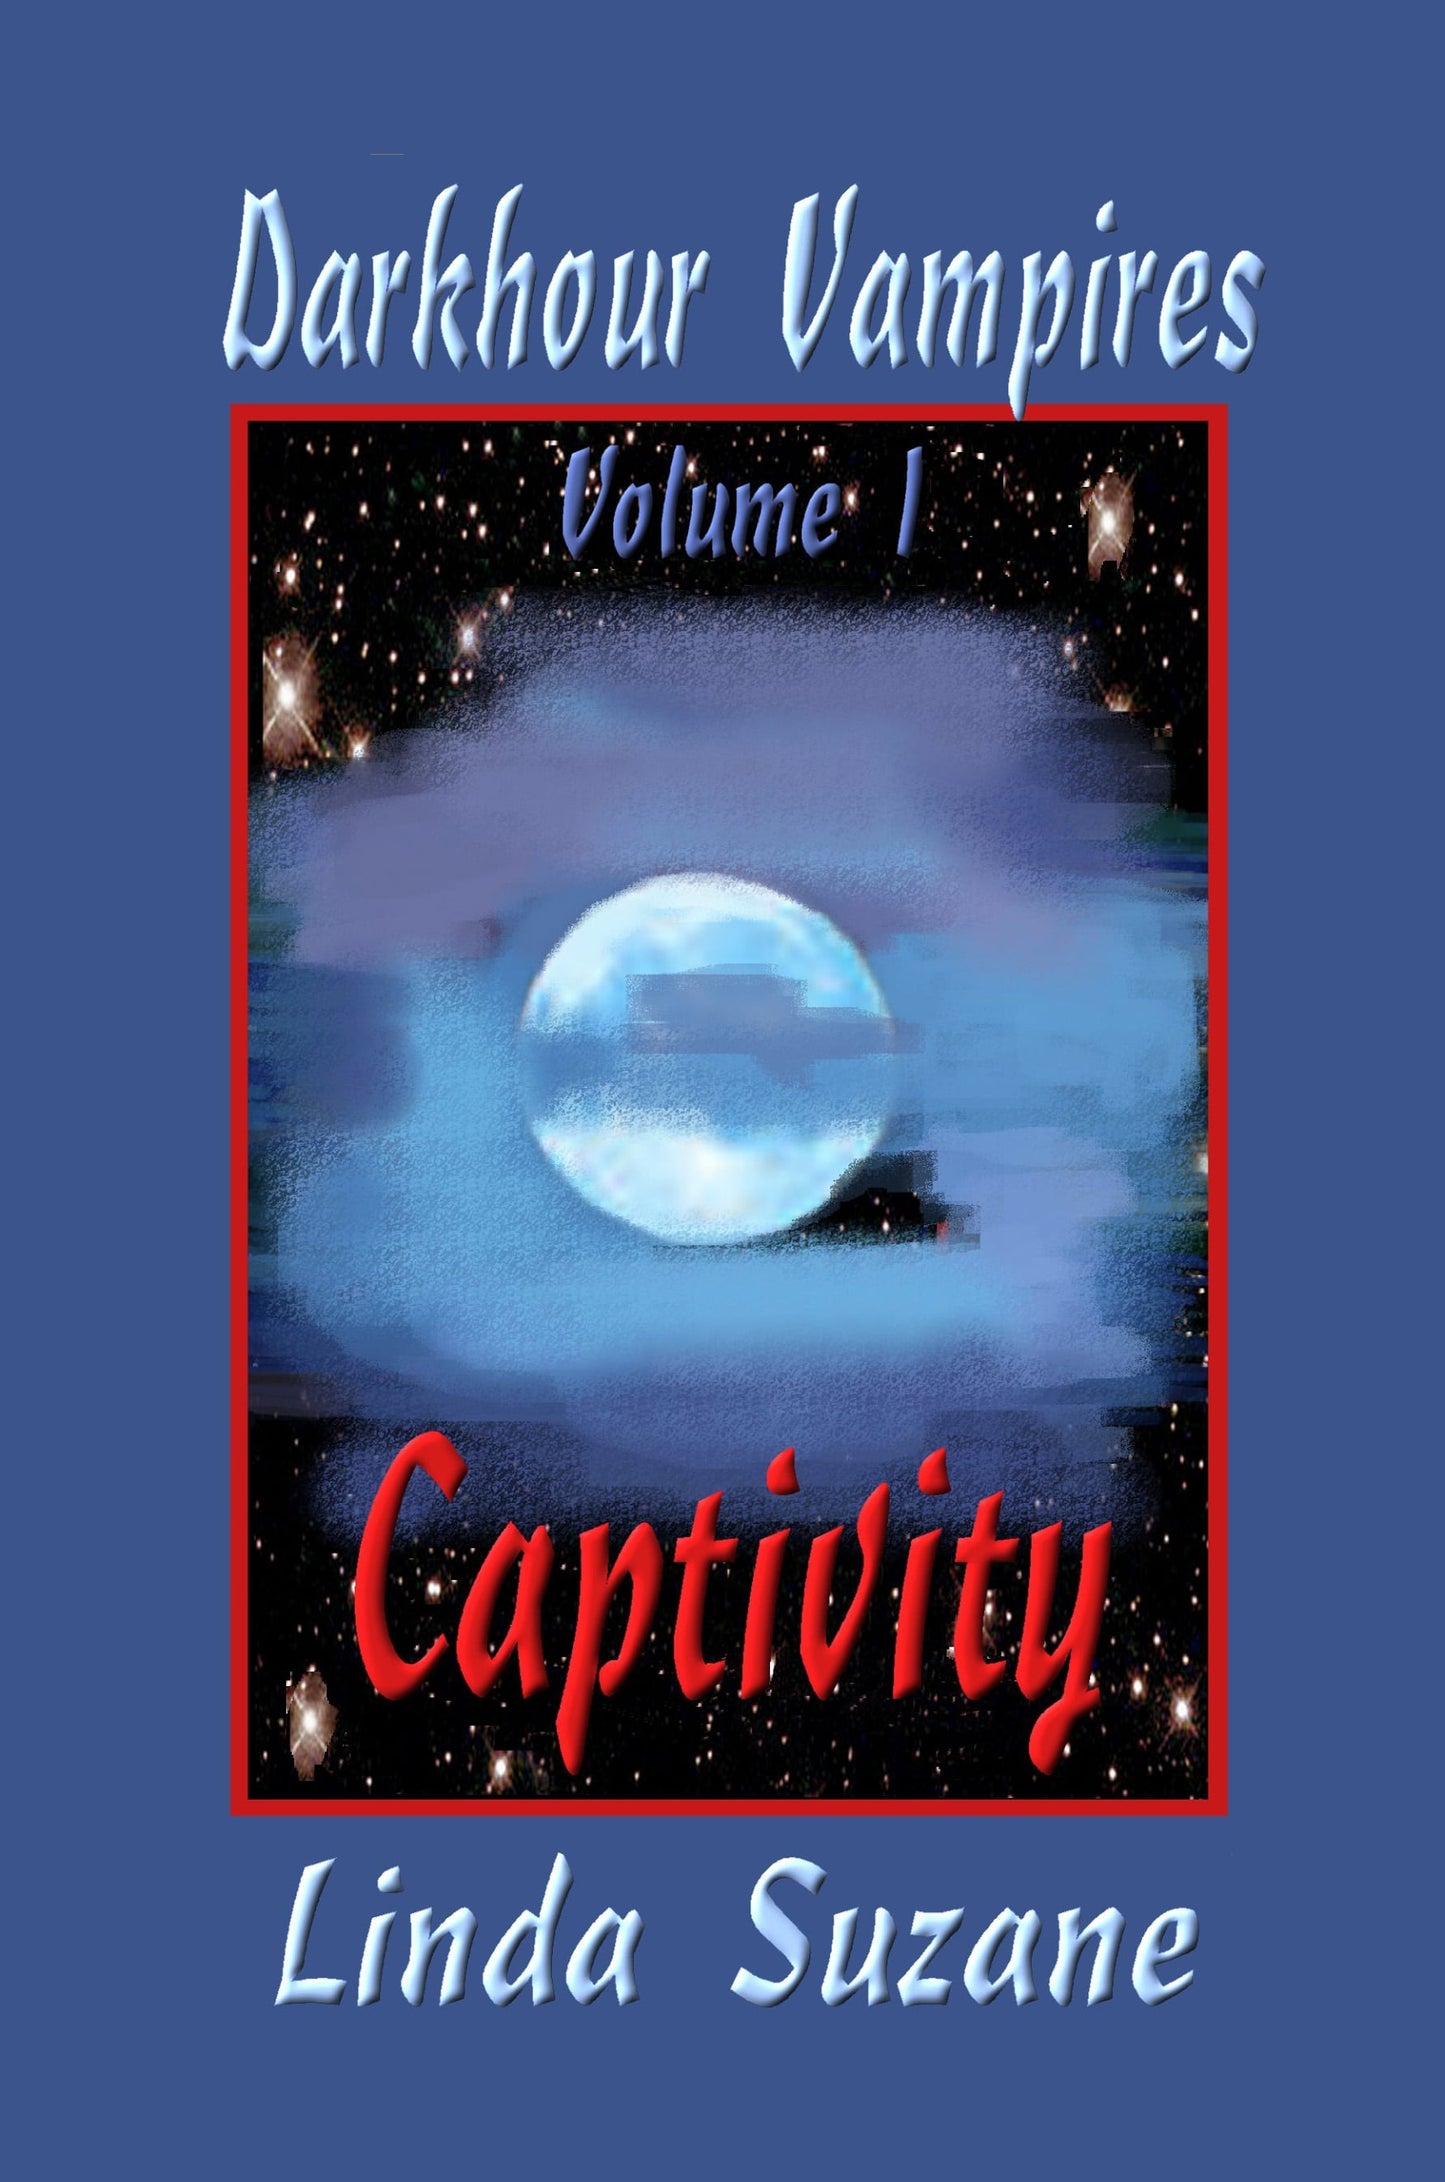 Captivity (Darkhour Vampires Book 1)